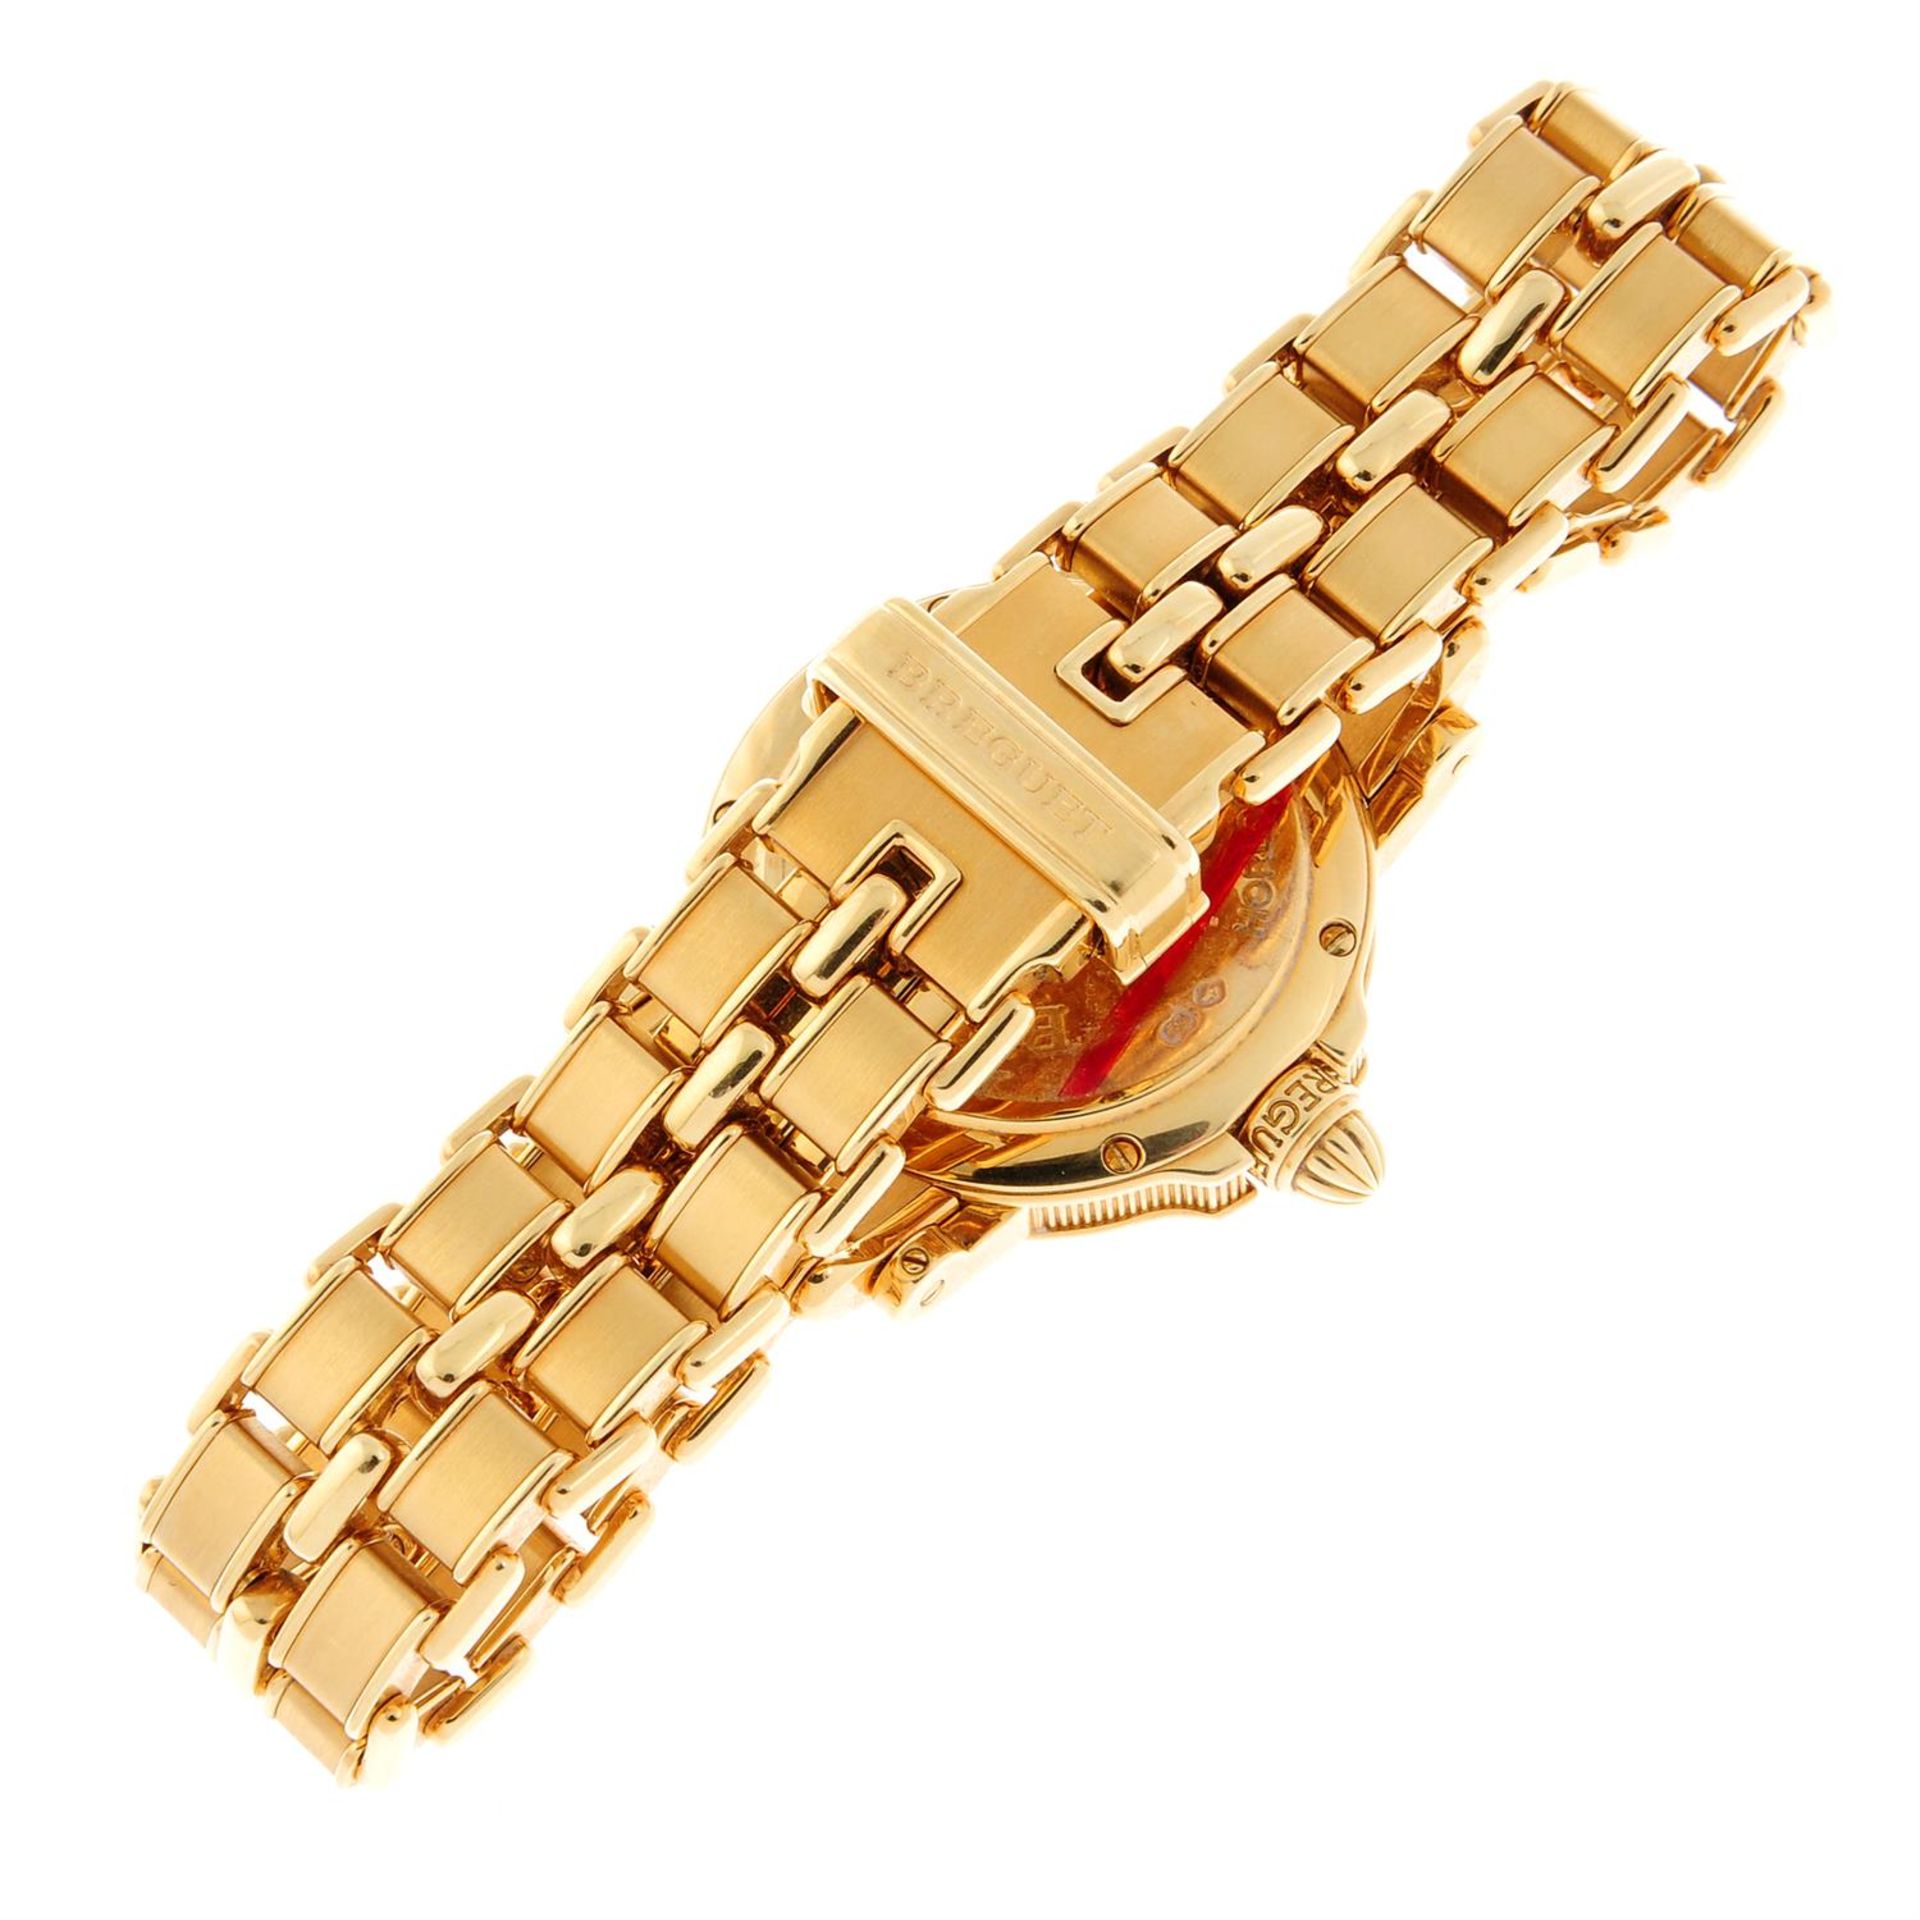 BREGUET - a diamond set 18ct yellow gold Horloger De La Marine bracelet watch, 26mm. - Image 2 of 7